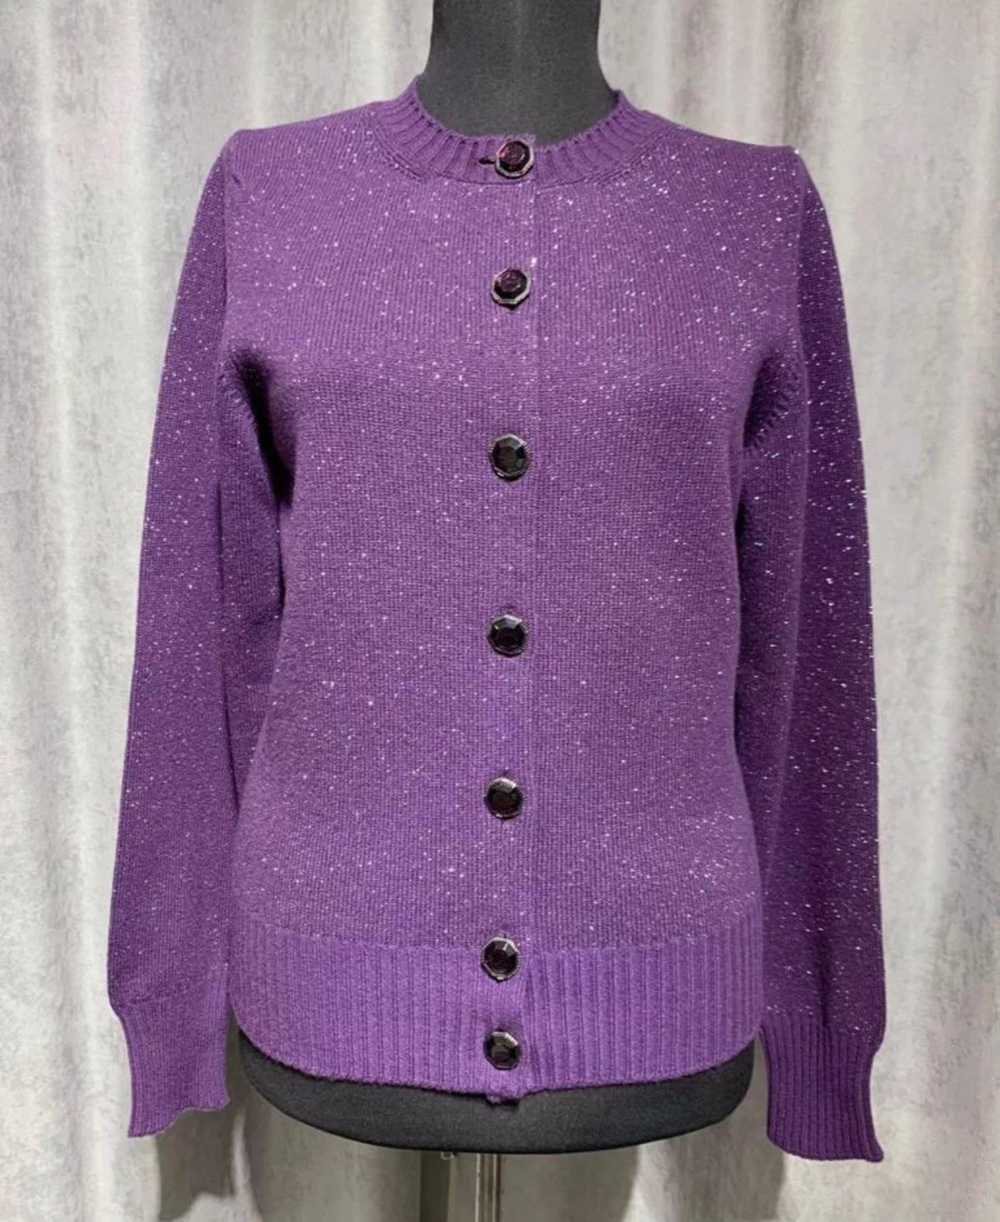 Chanel Purple Metallic Knit Cashmere Cardigan - image 4